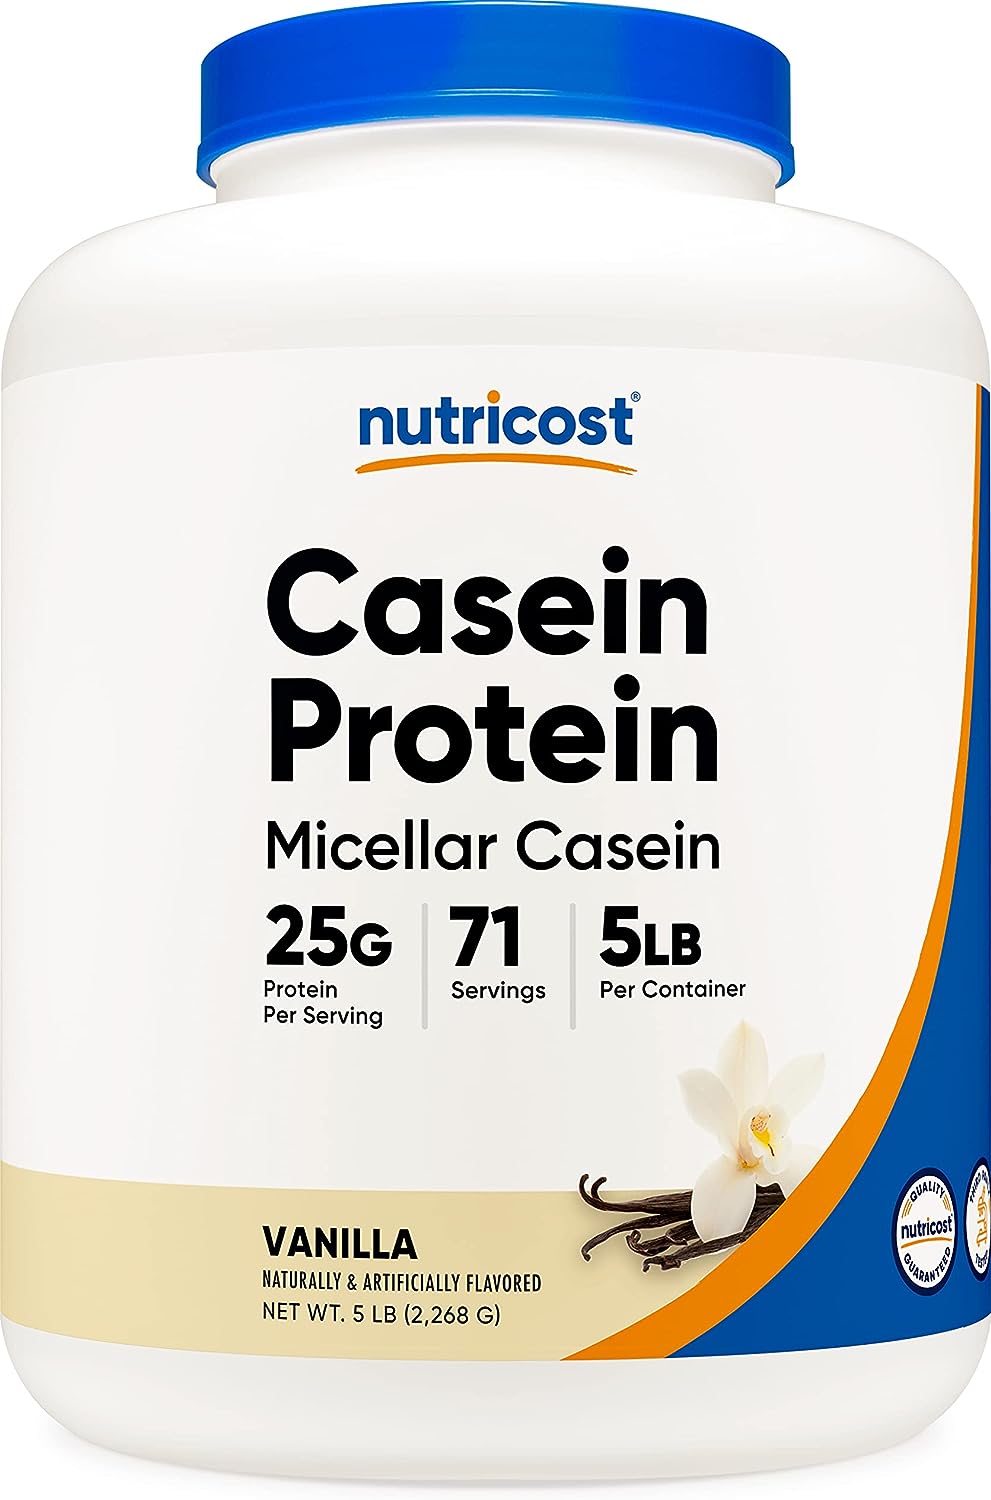 Nutricost Casein Protein Powder 5 Vanilla - Micellar Casein, Gluten Free, Non-GMO